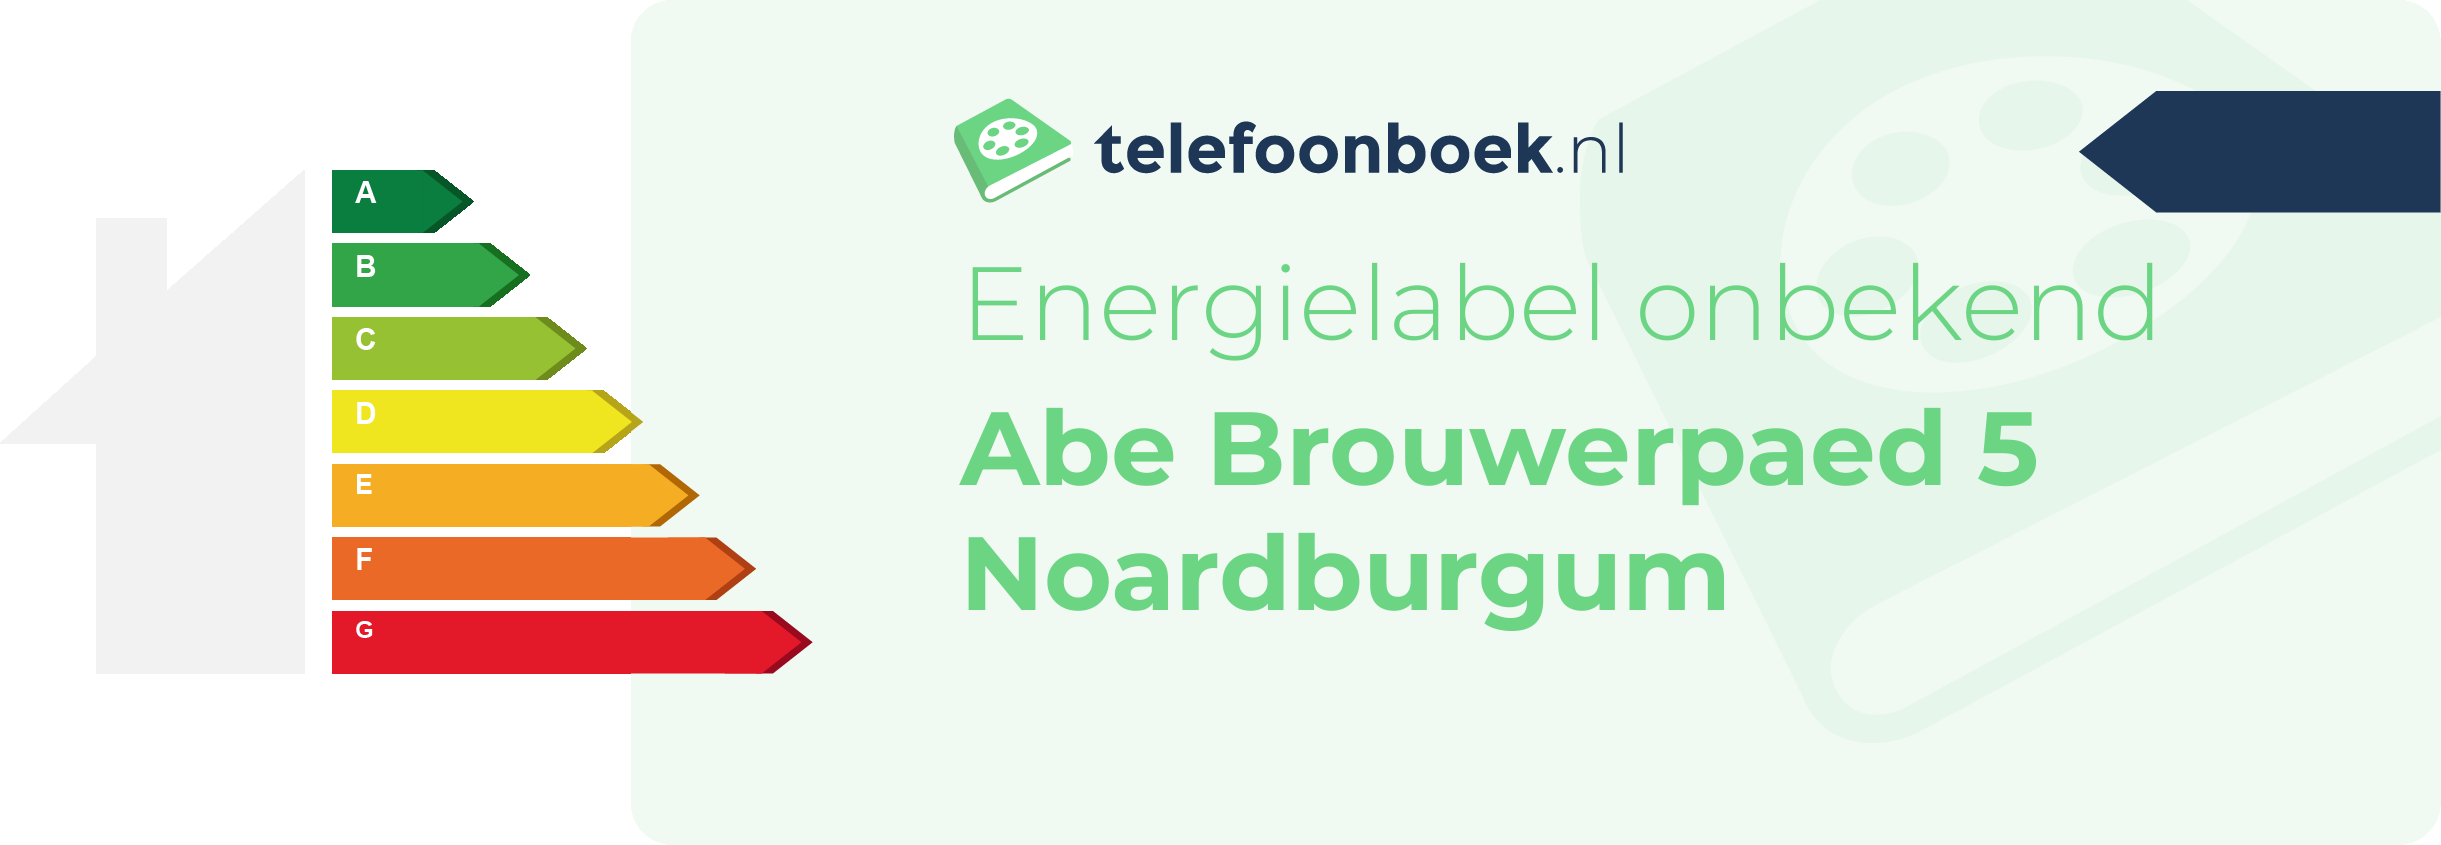 Energielabel Abe Brouwerpaed 5 Noardburgum